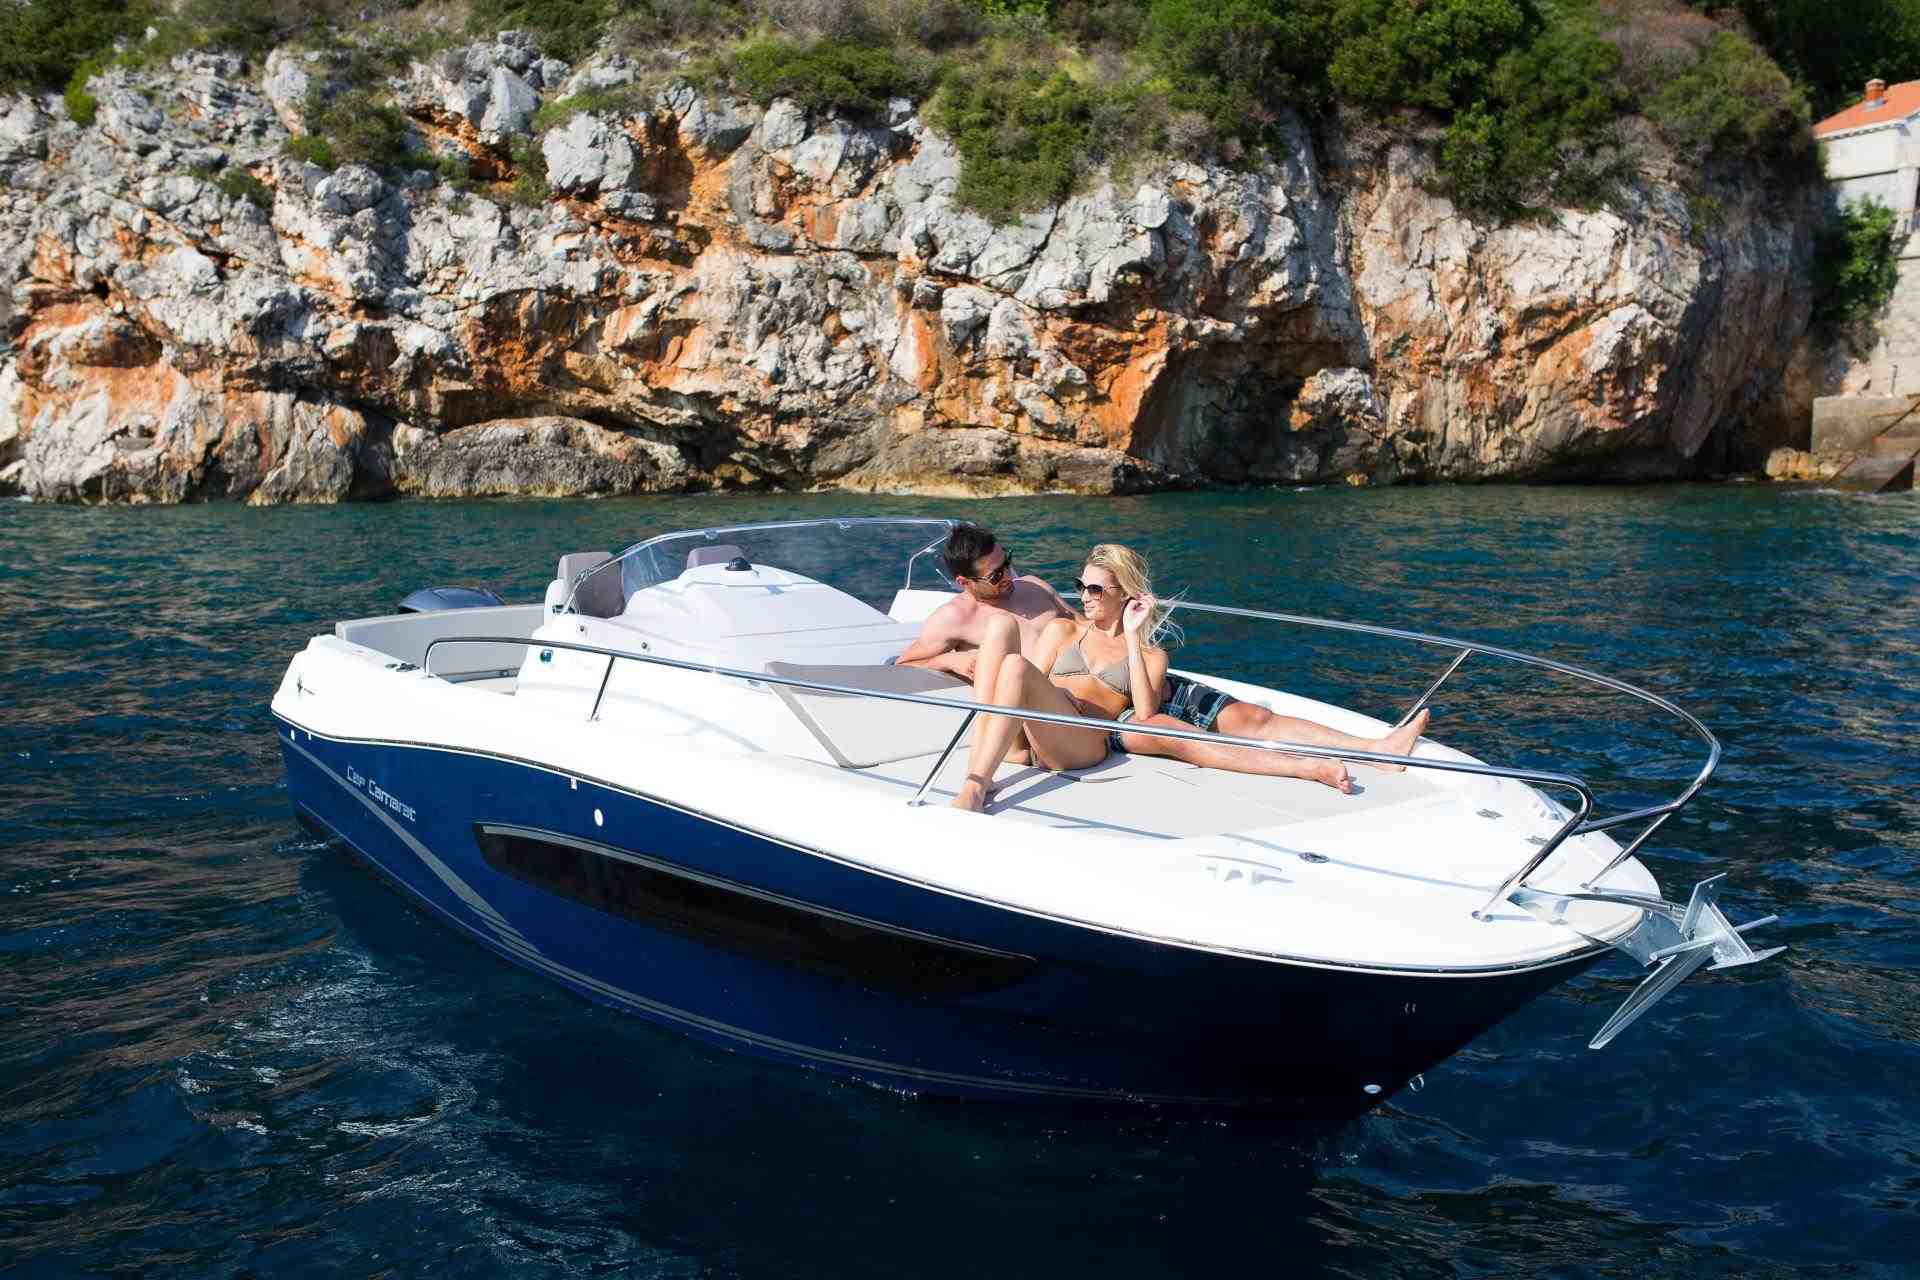  boat rentals Dubrovnik and Neretva Dubrovnik Dubrovnik and Neretva  Jeanneau Cap Camarat 7.5WA Serie2 2018 25 